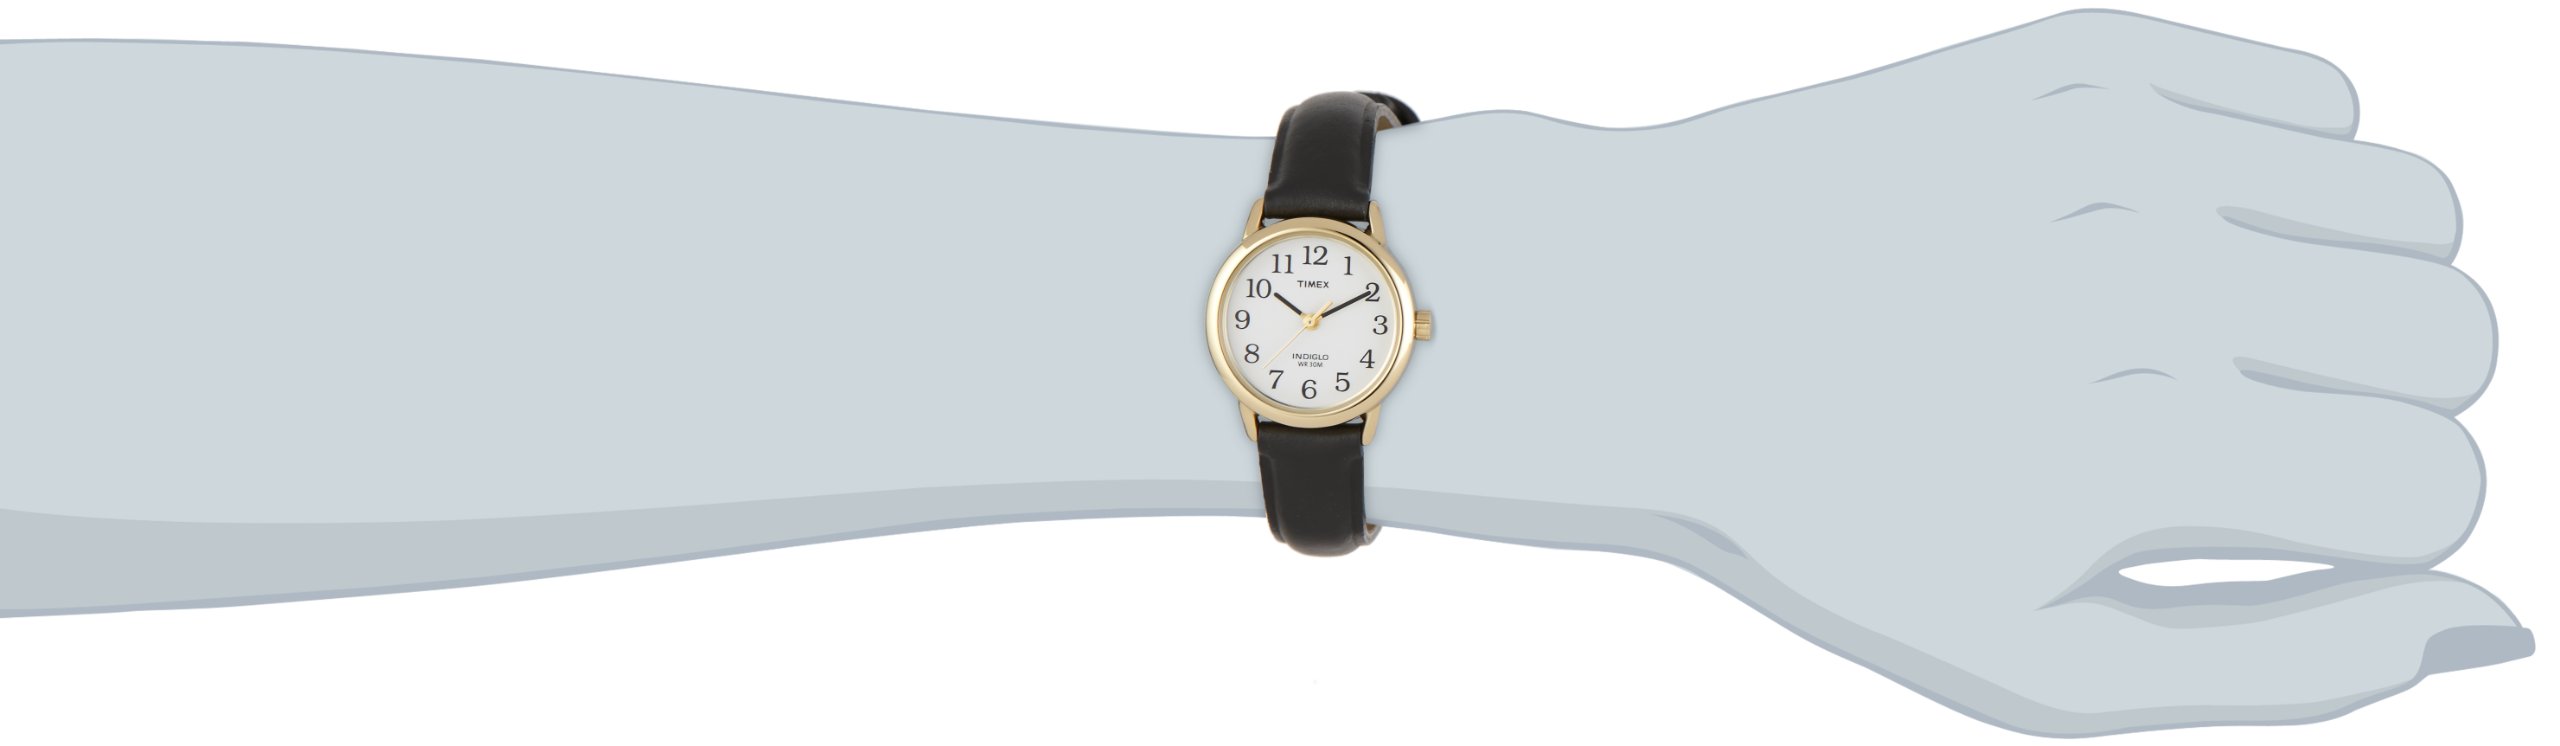 Timex Easy Reader Women's 25 mm Leather Strap Date Window Watch